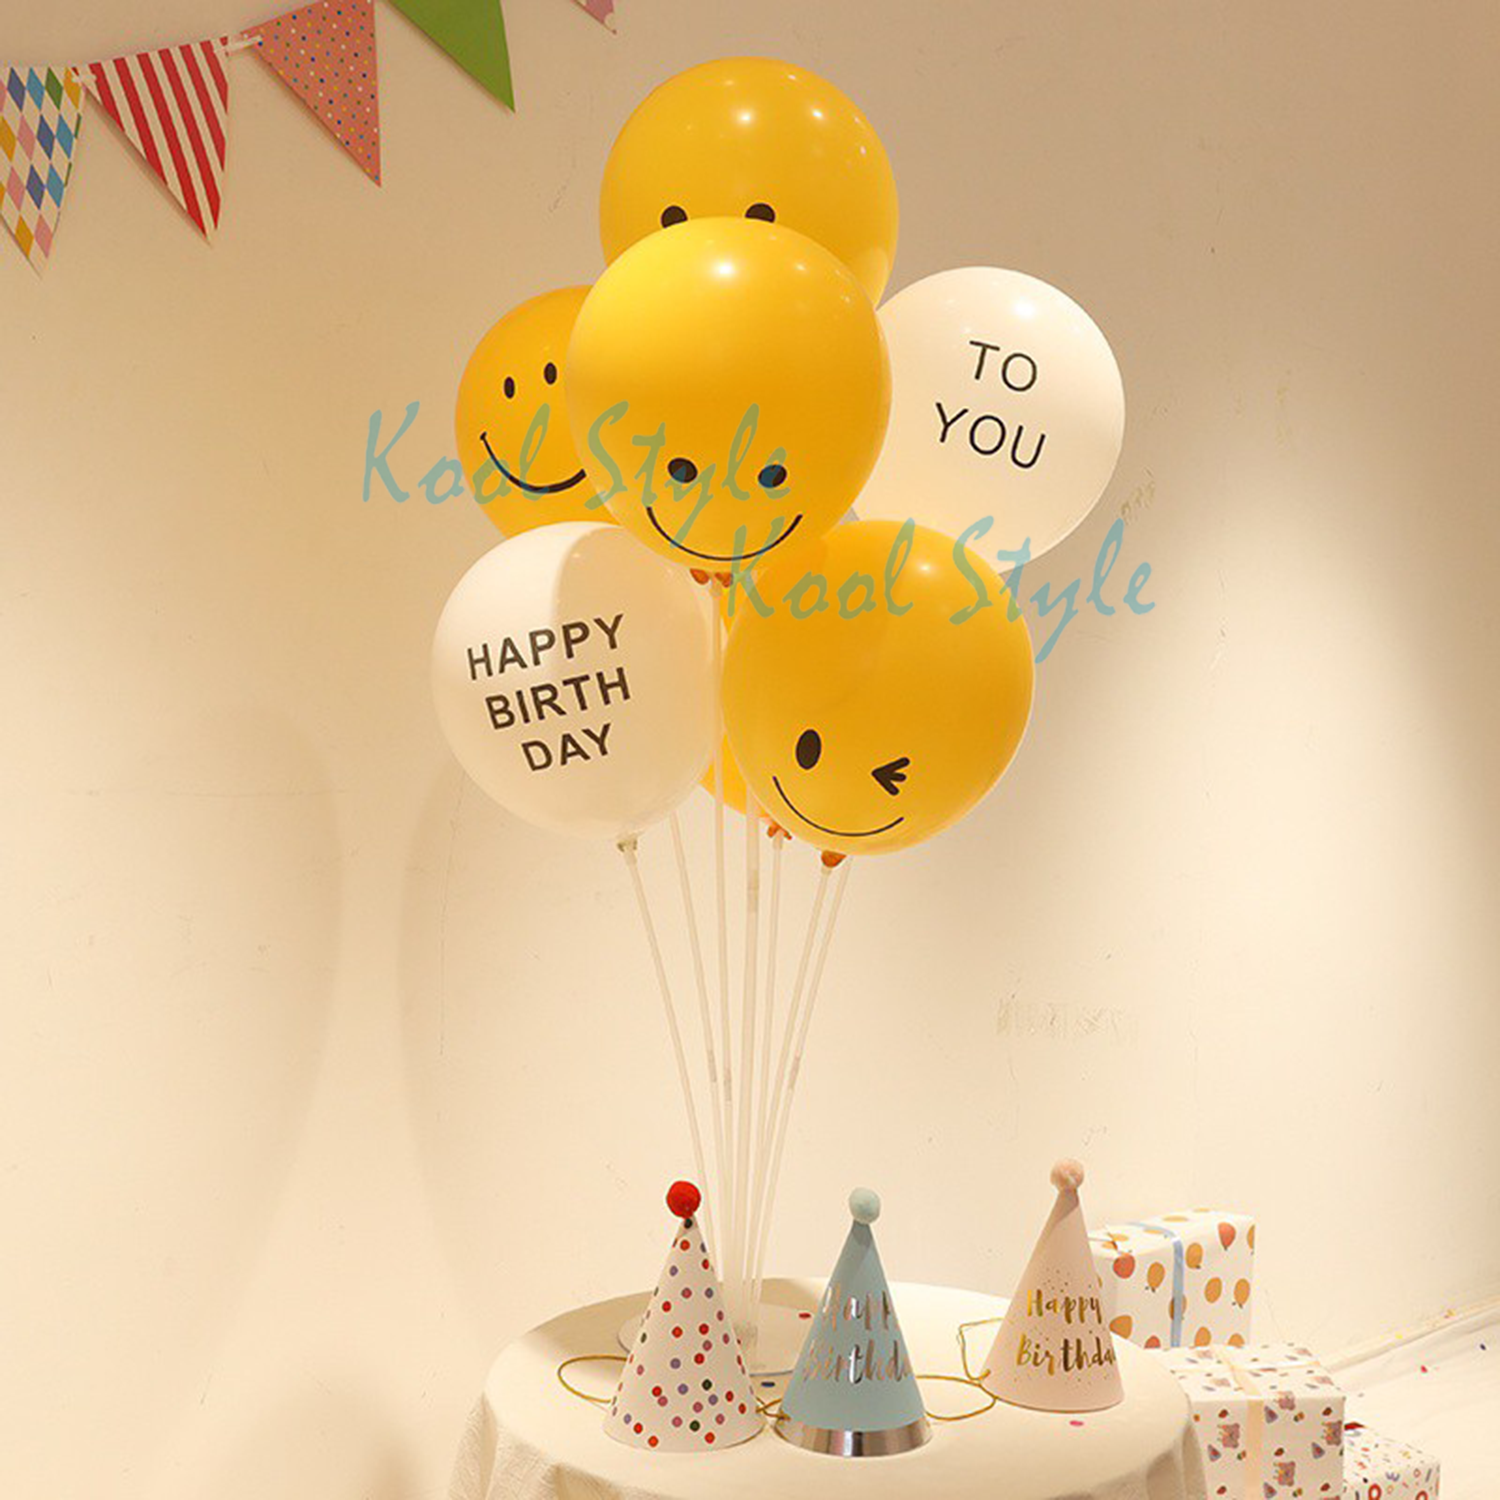 Bóng tròn in chữ HAPPY BIRTHDAY + TO YOU - Kool Style Shop